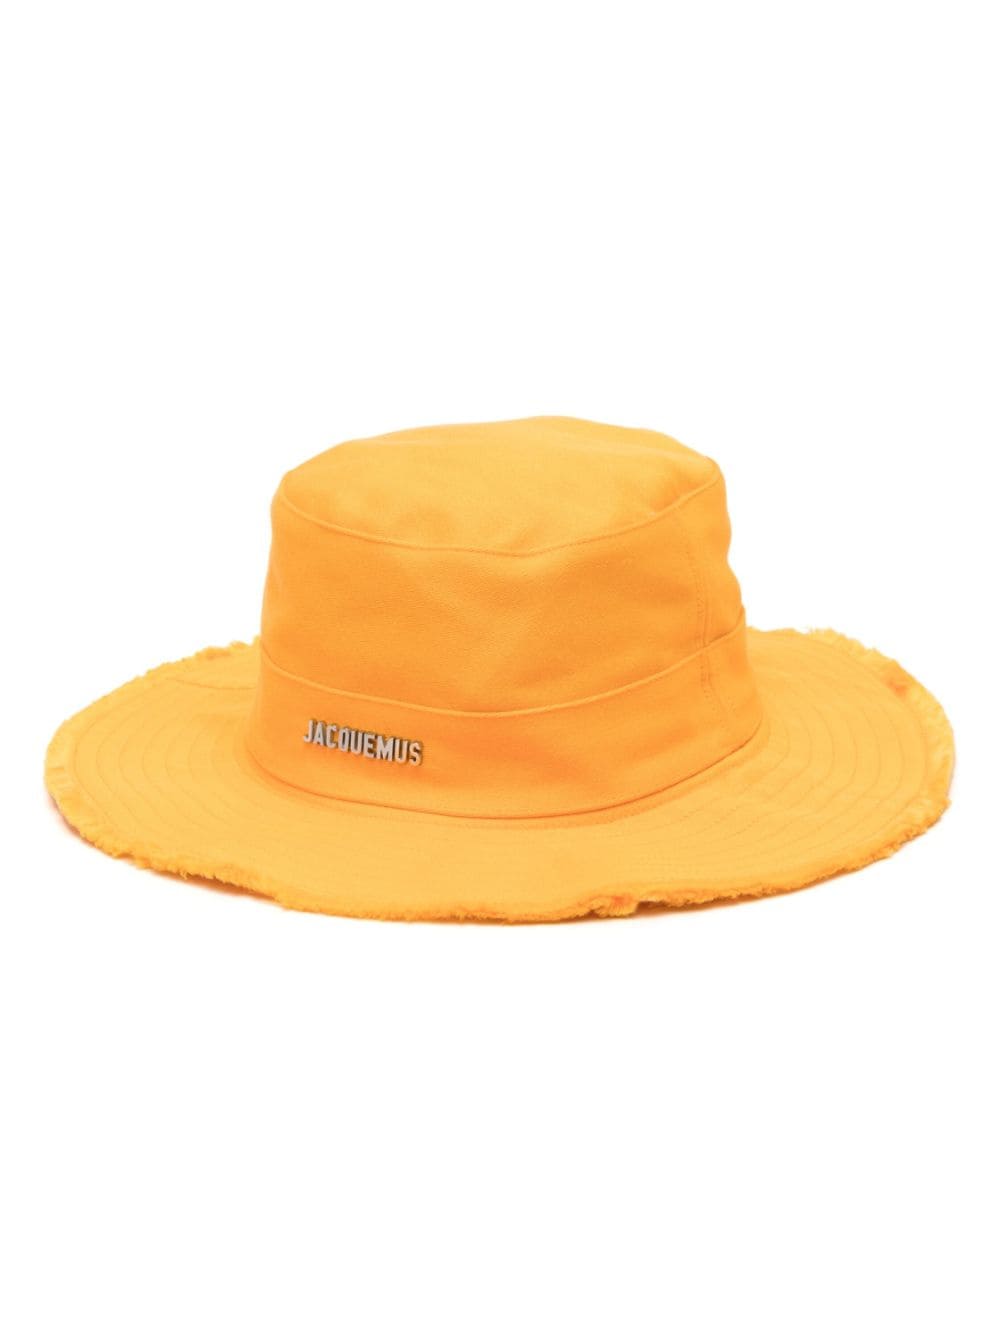 Jacquemus Le Bob Artichaut bucket hat - Orange von Jacquemus